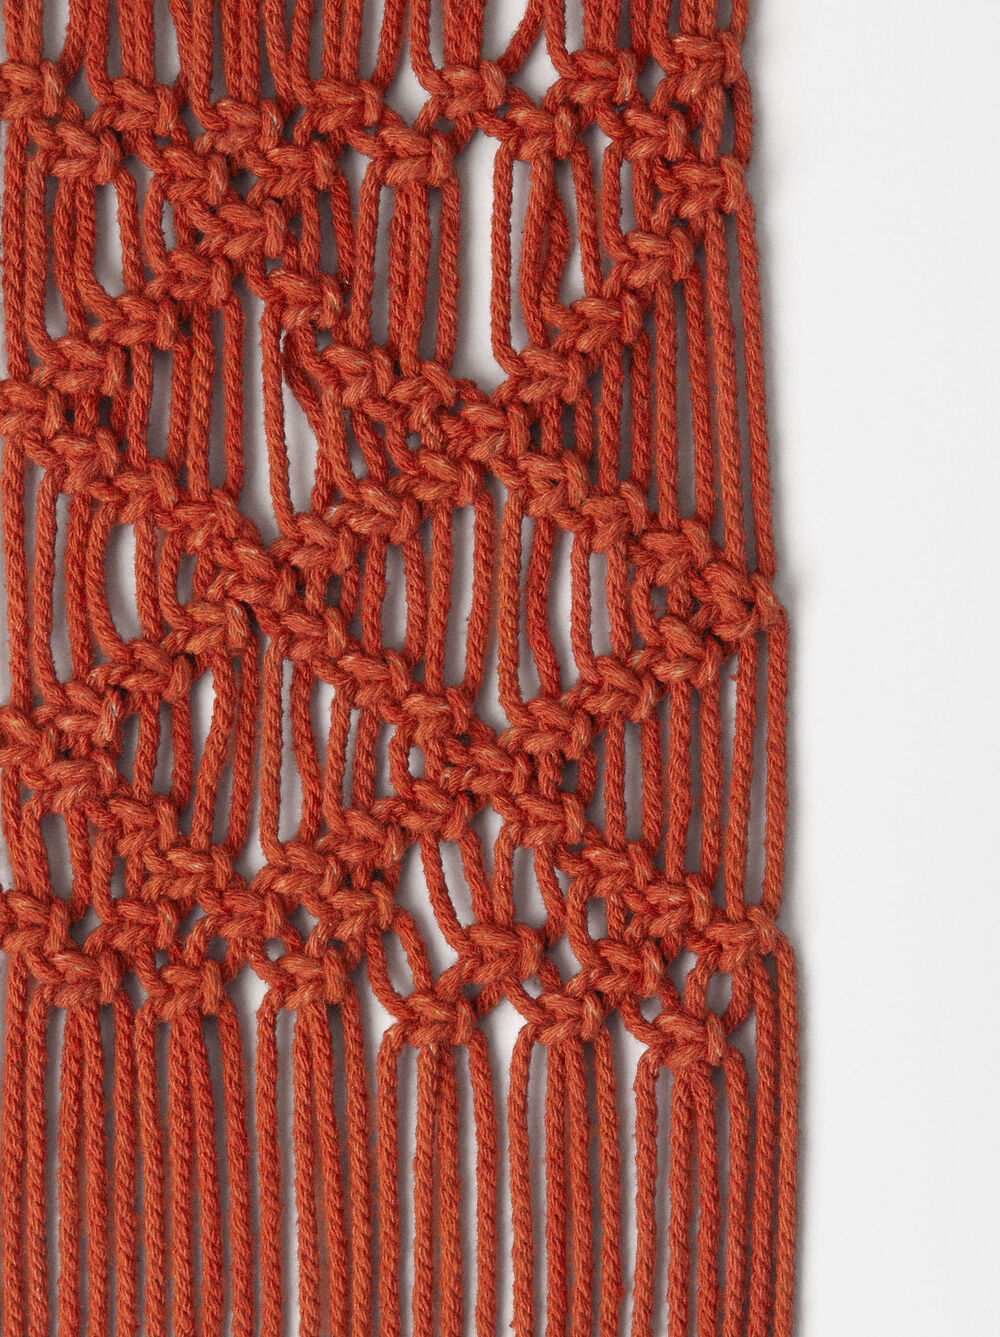 Exclusivo Online - Pulsera De Madera Crochet